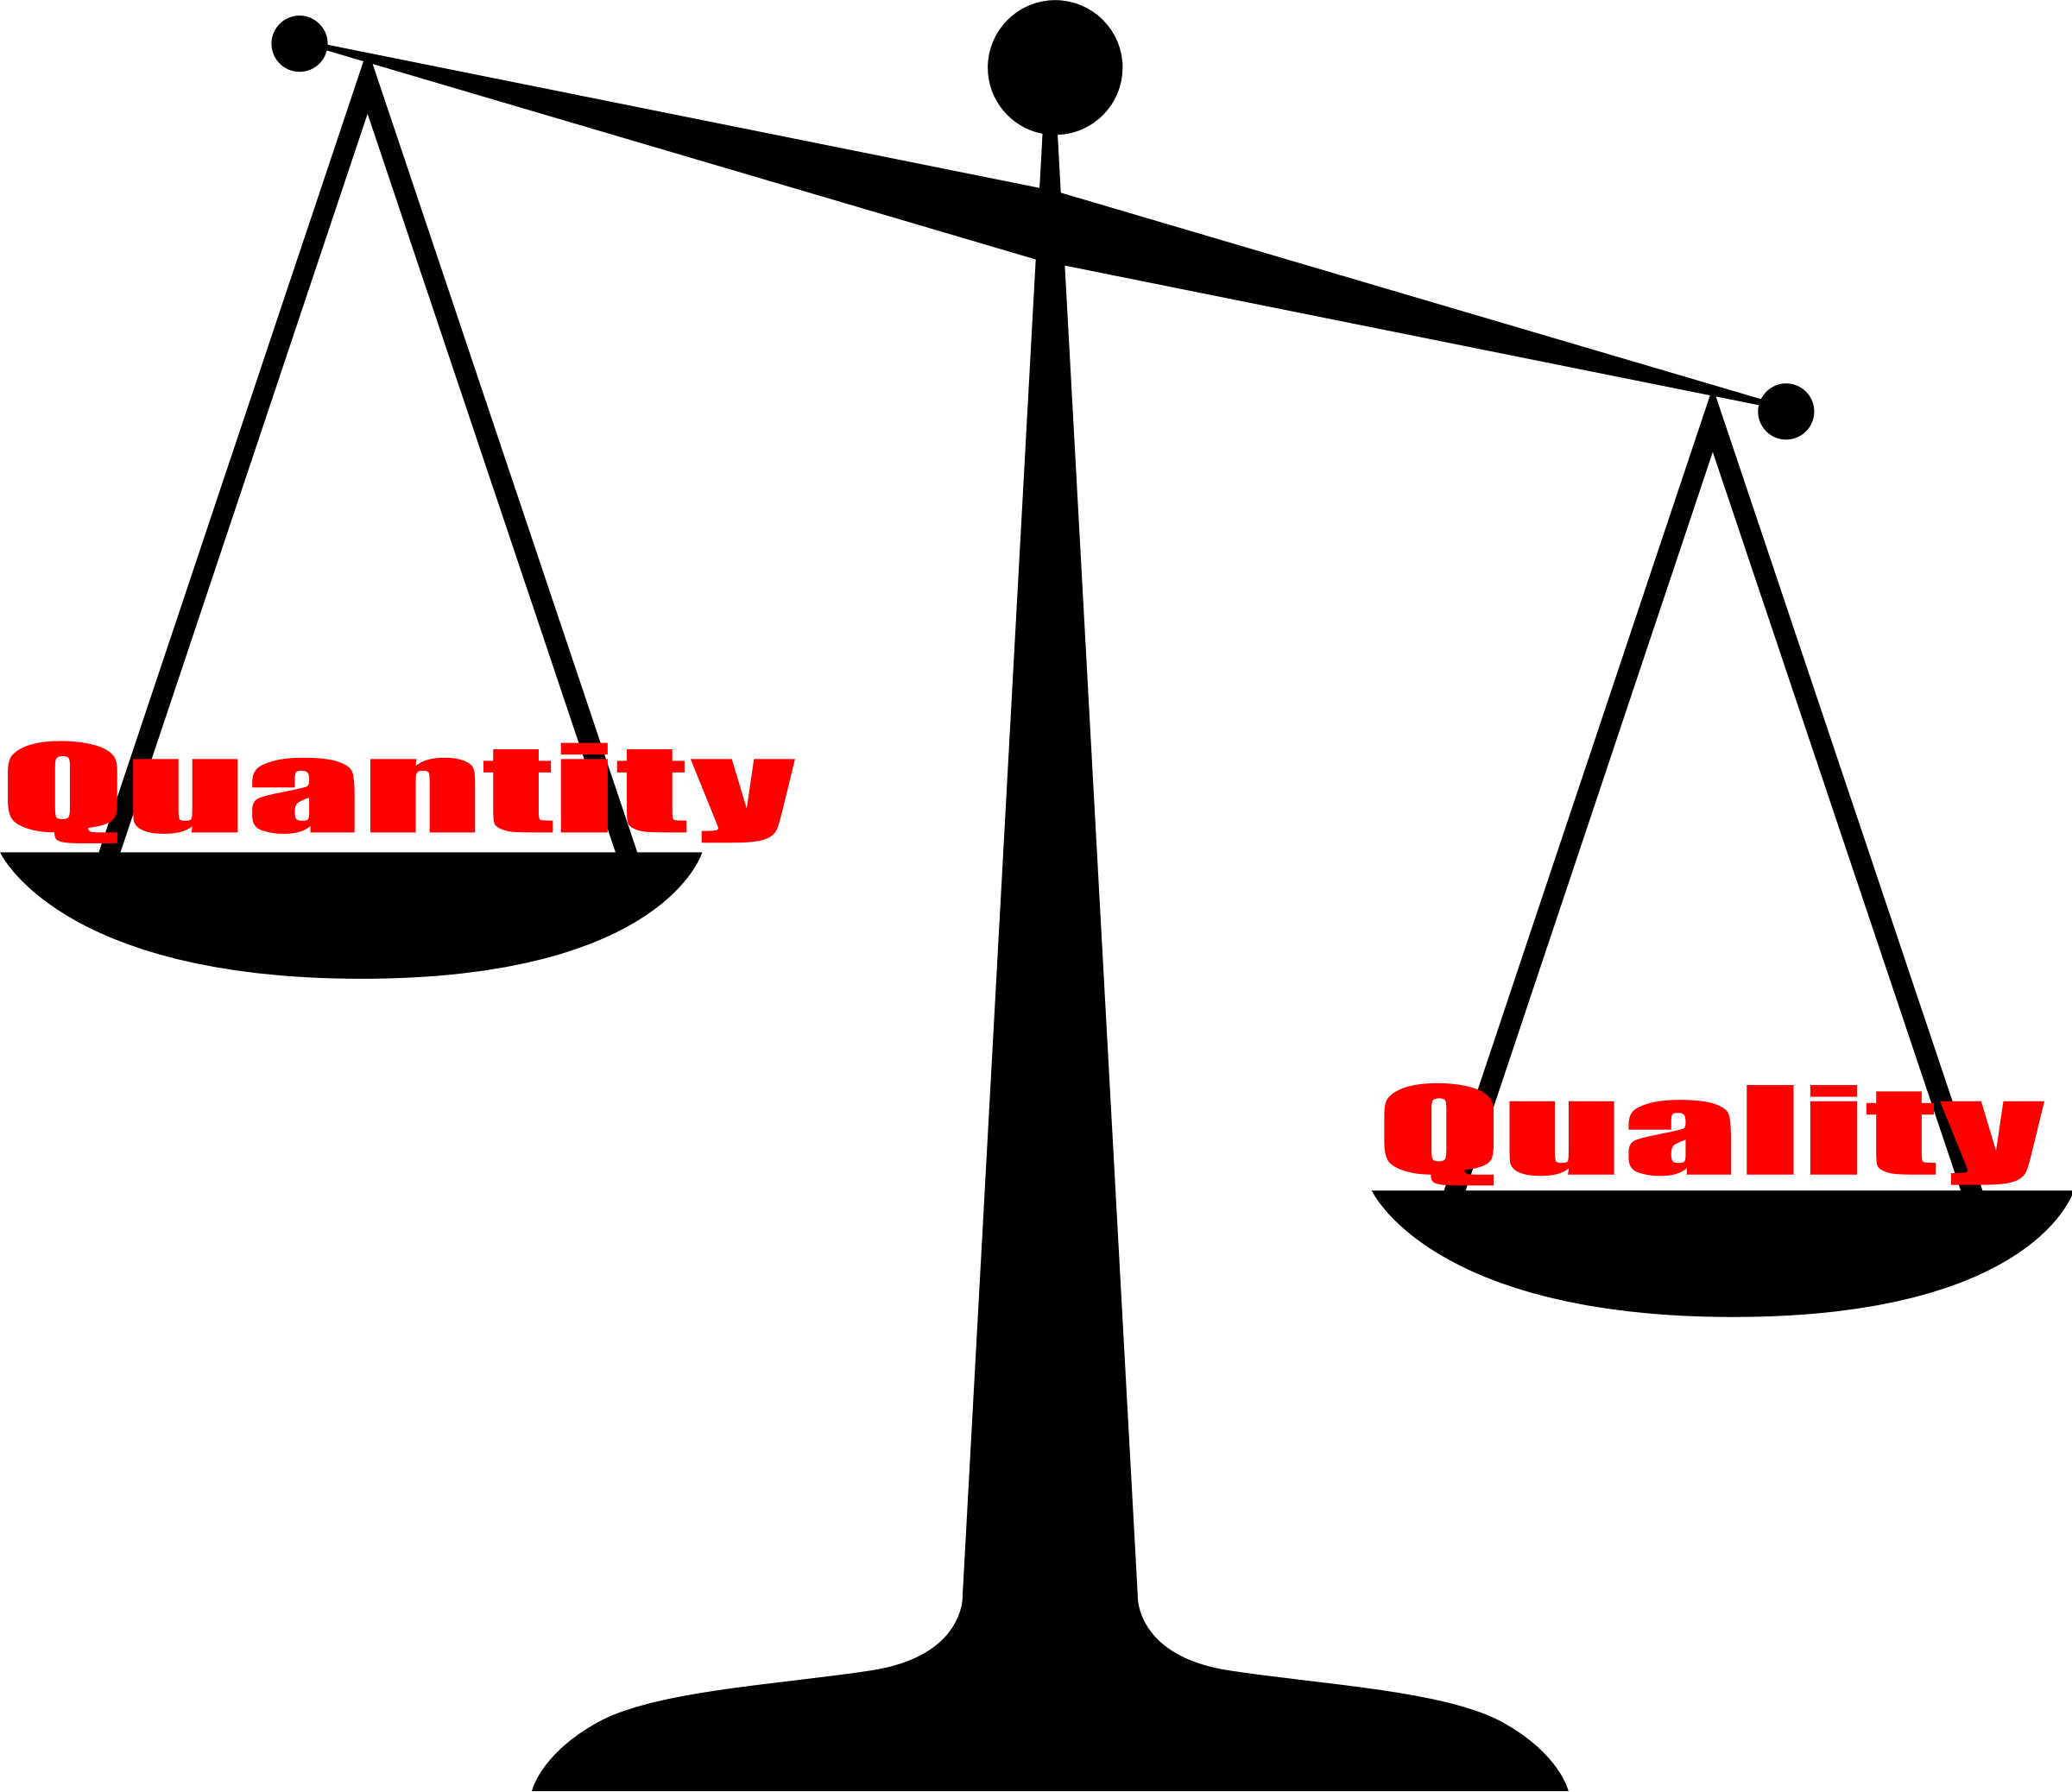 Quality vs Quantity Vector Clipart image.